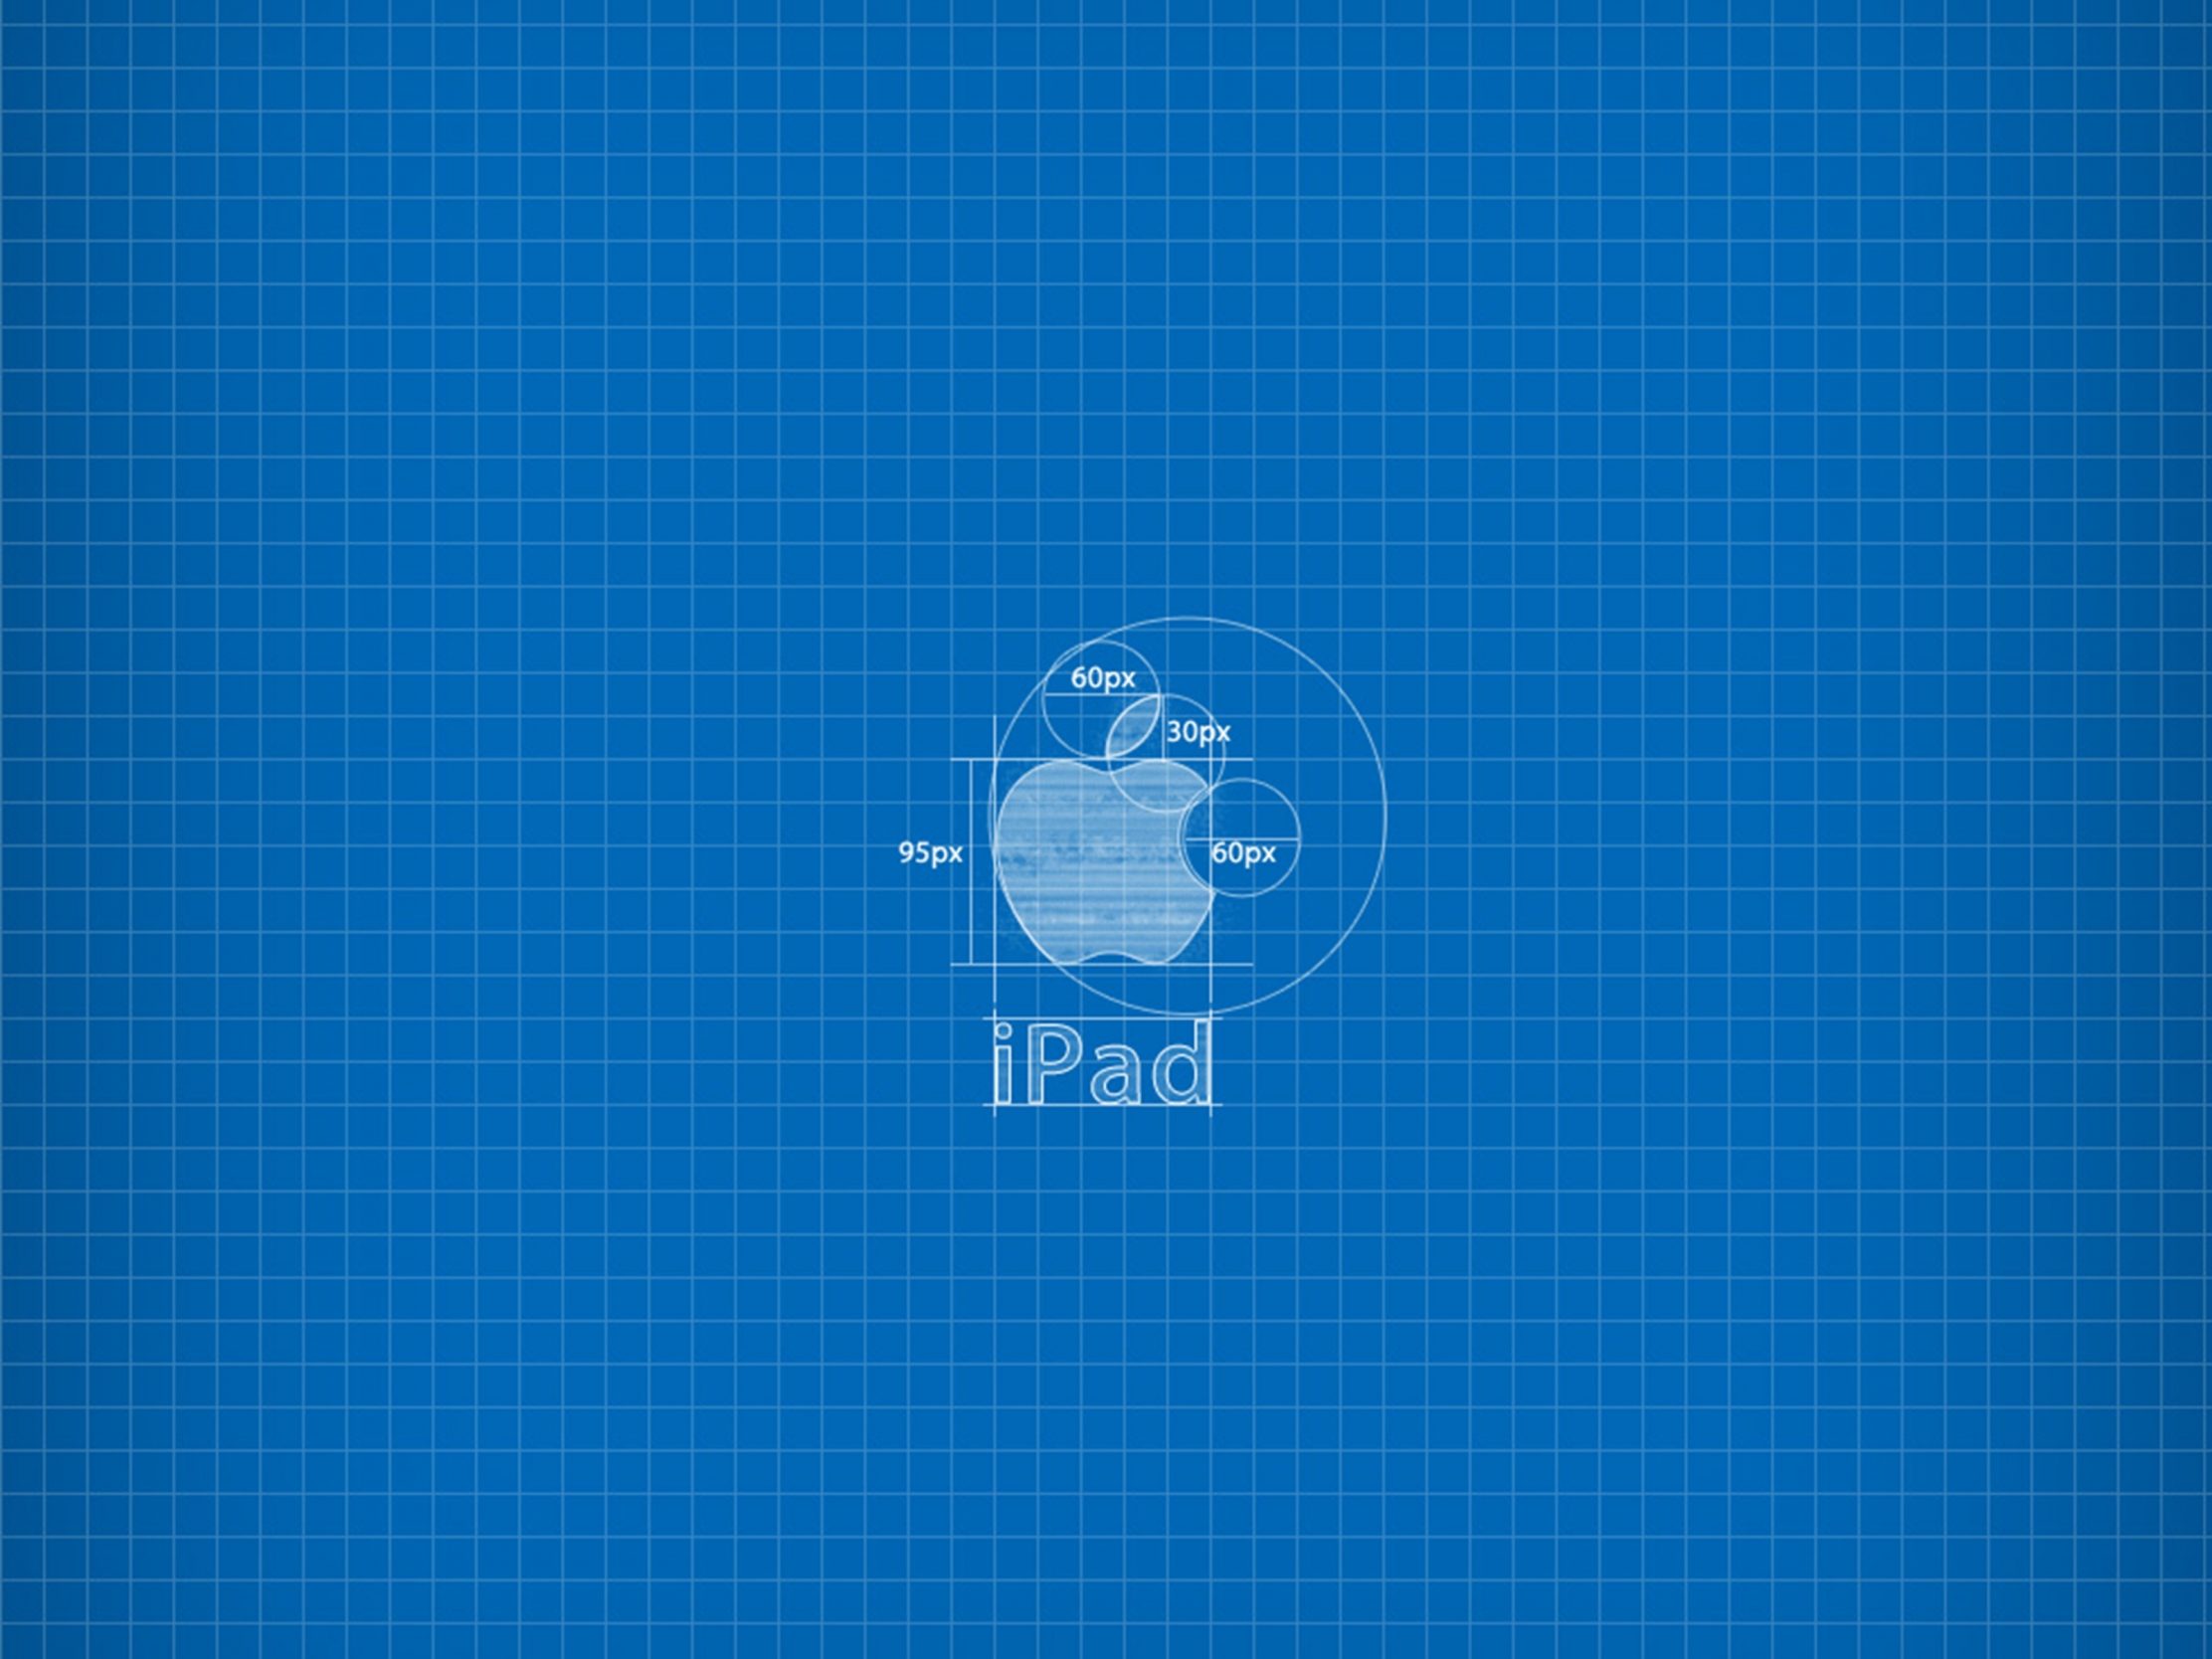 2224x1668 iPad Pro wallpapers Apple Blueprint Ipad Wallpaper 2224x1668 pixels resolution